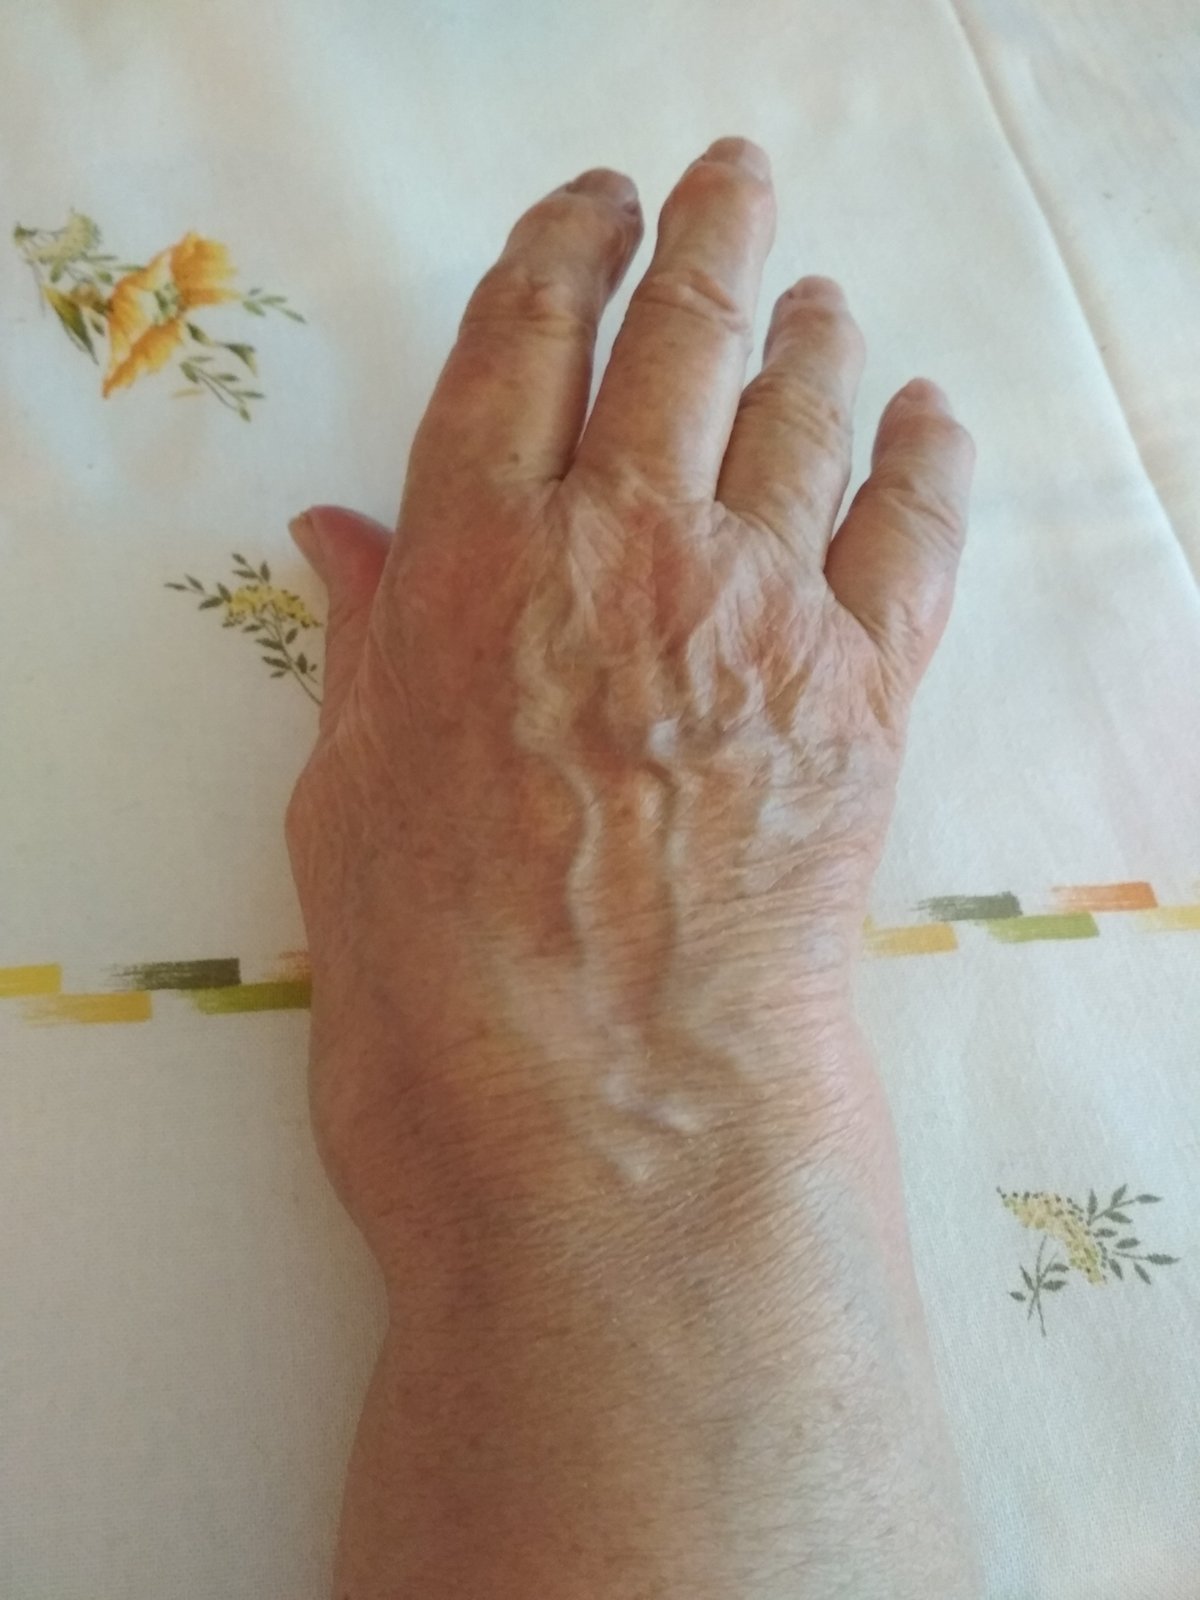 Symptoms of wrist arthritis